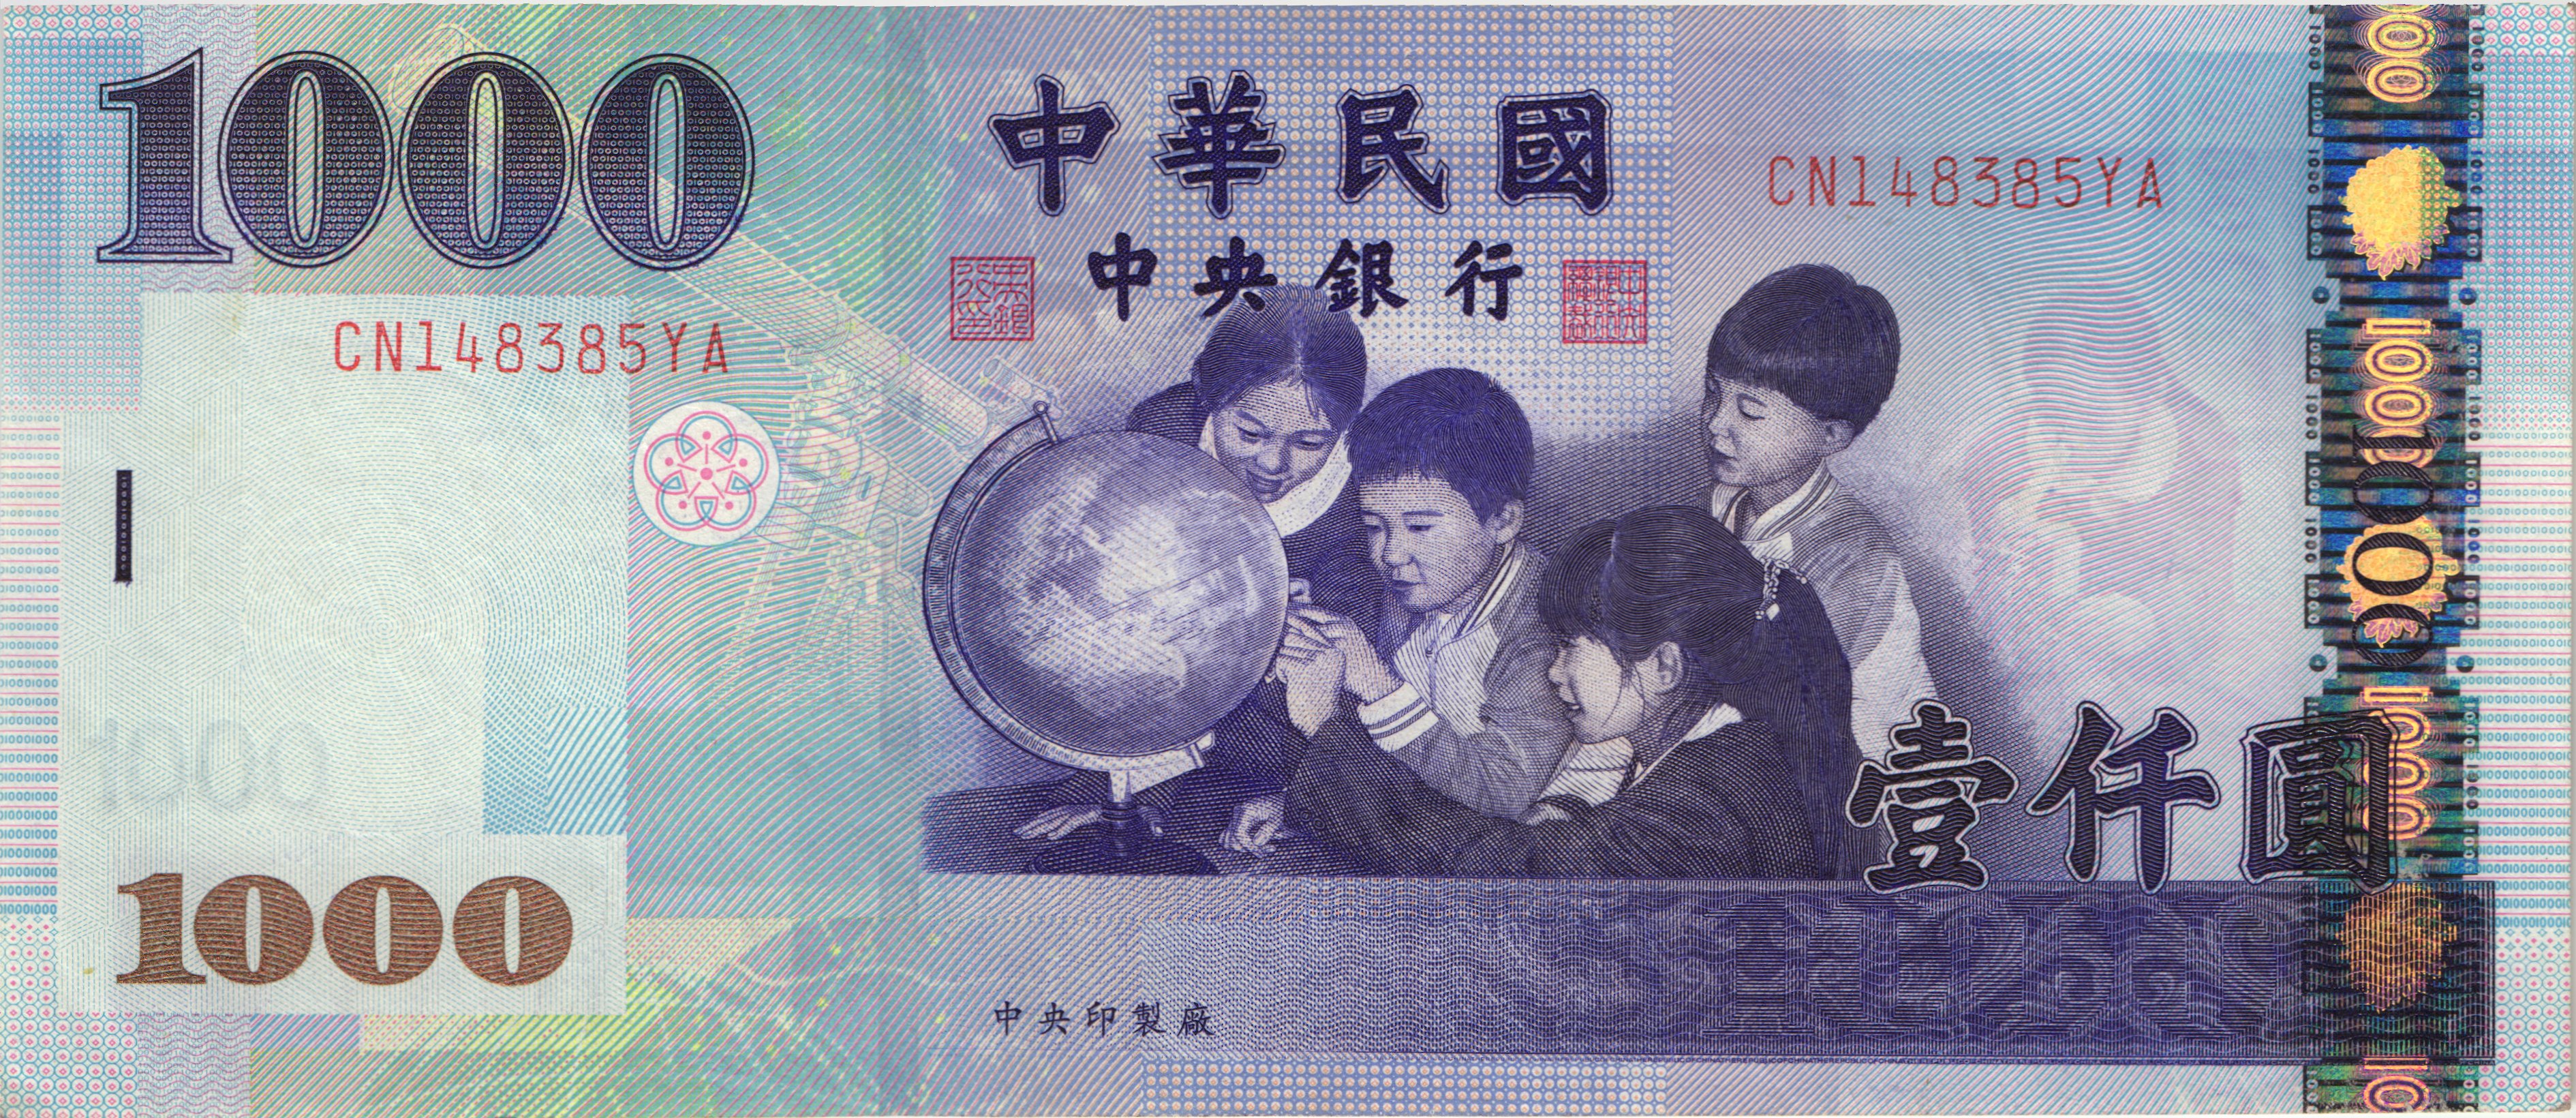 Тысяча долларов в юанях. 1000 Юаней Тайваня. Тайвань юань купюра. Банкноты юань 1000. Тысяча юаней купюра.